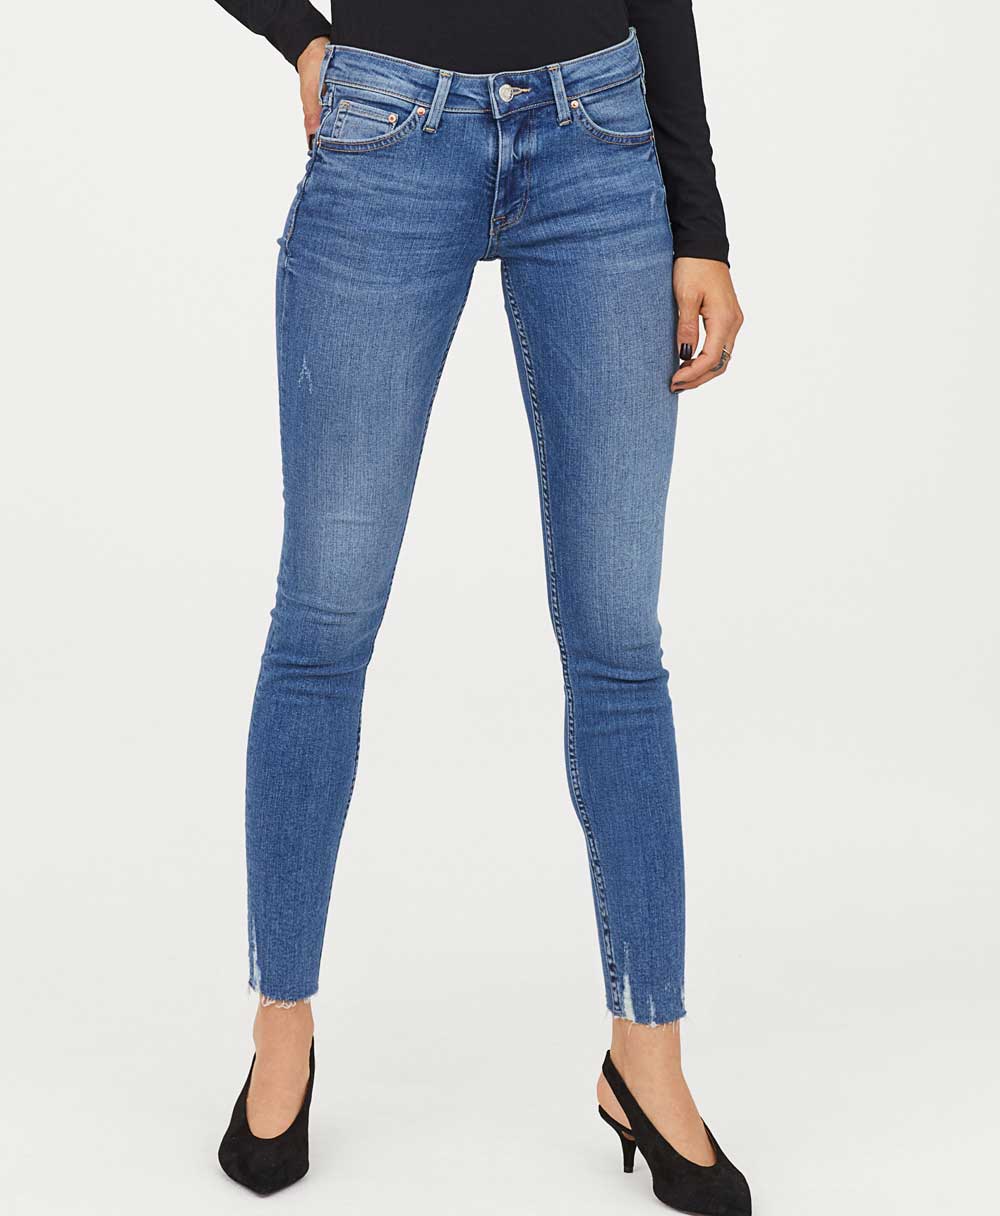 H&M jeans inverno 2020